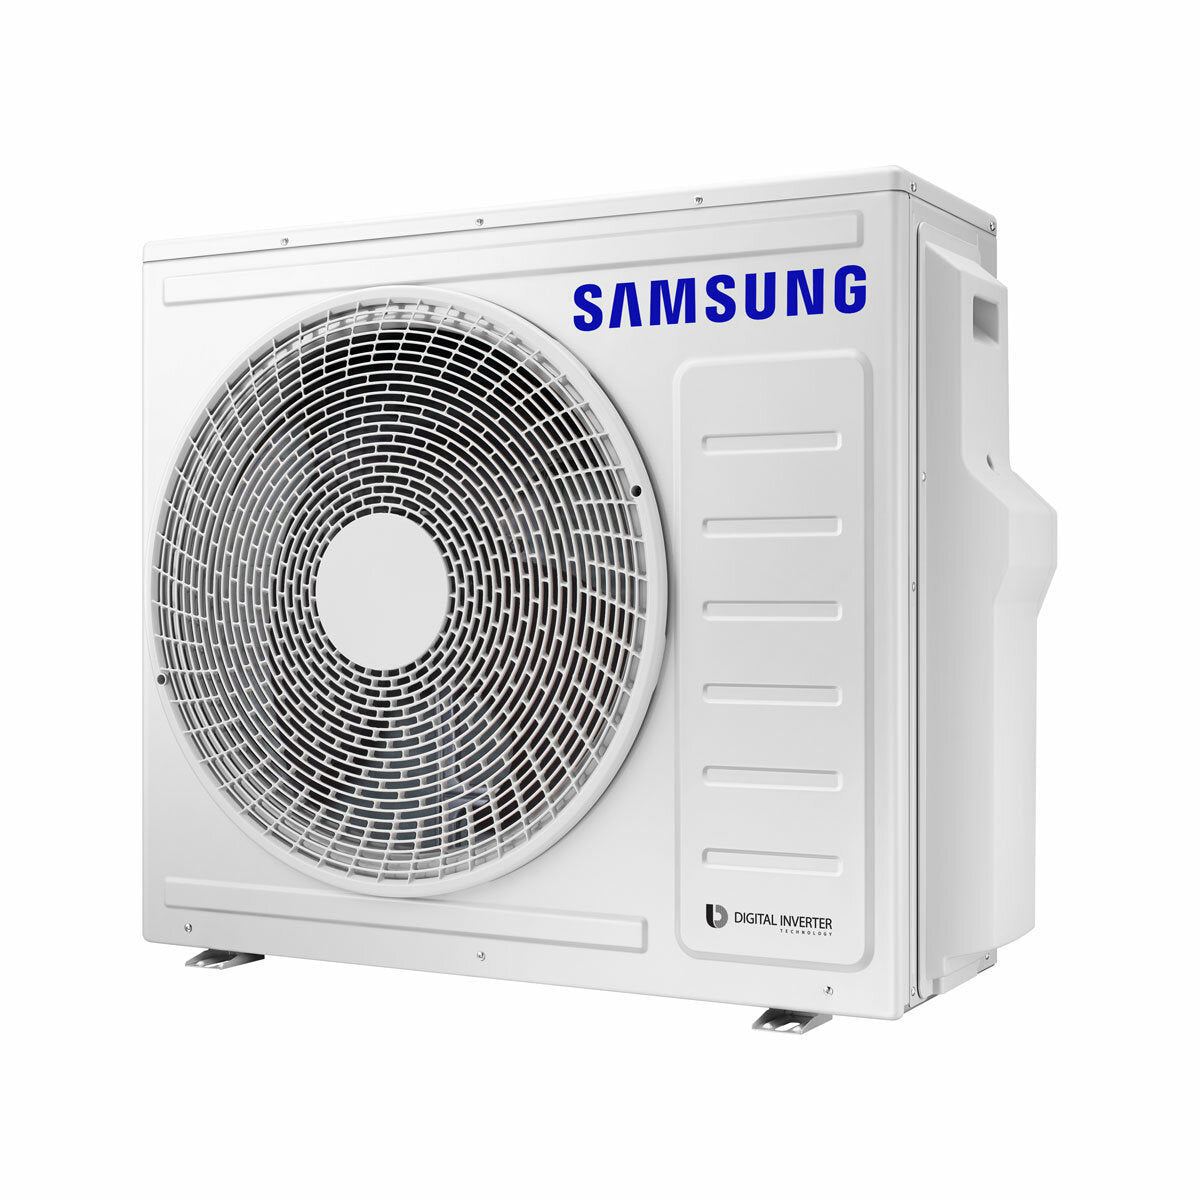 Samsung windfree Avant air conditioner Quadri split 7000 + 7000 + 12000 + 12000 BTU inverter A ++ wifi outdoor unit 8.0 kW